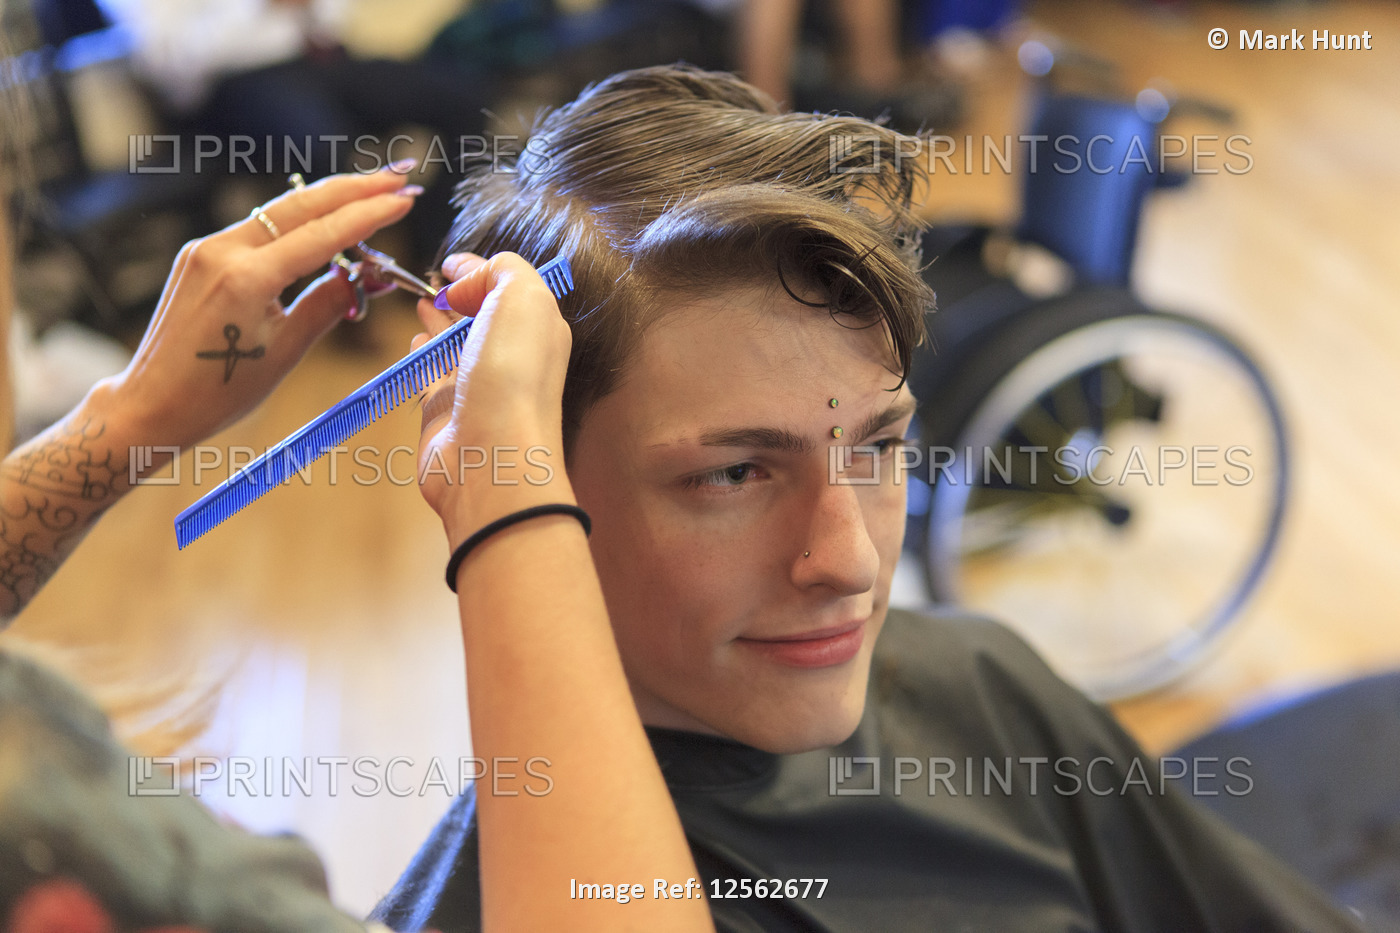 Trendy man with a spinal cord injury at a hair salon getting a hair cut